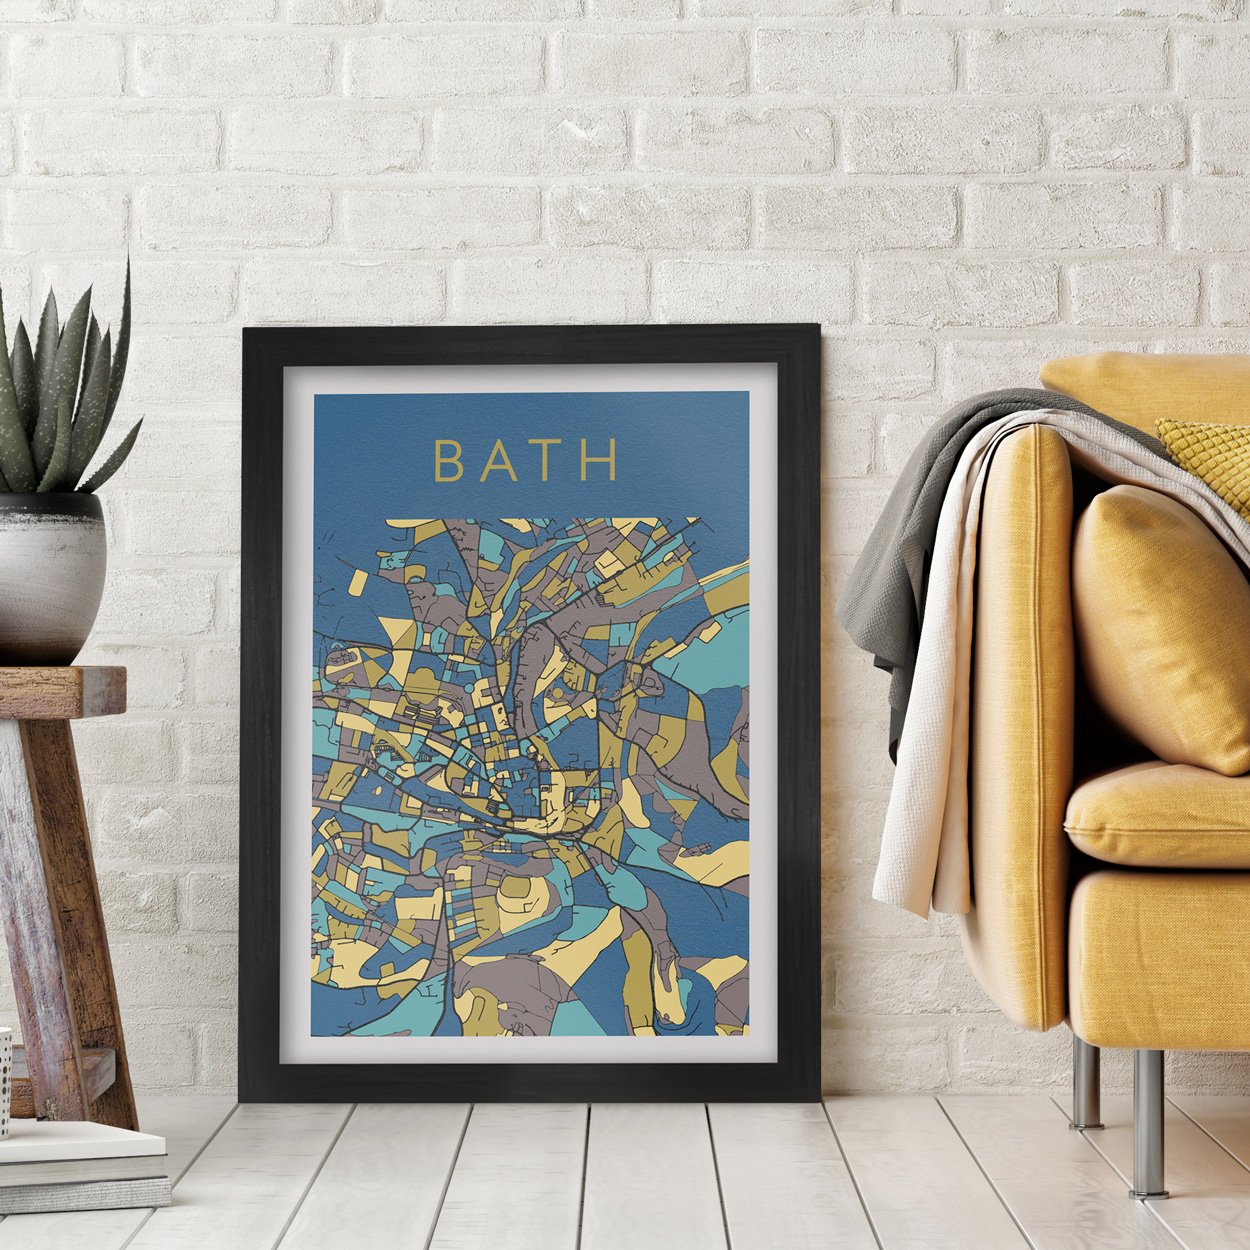 Bath Street Map colour poster